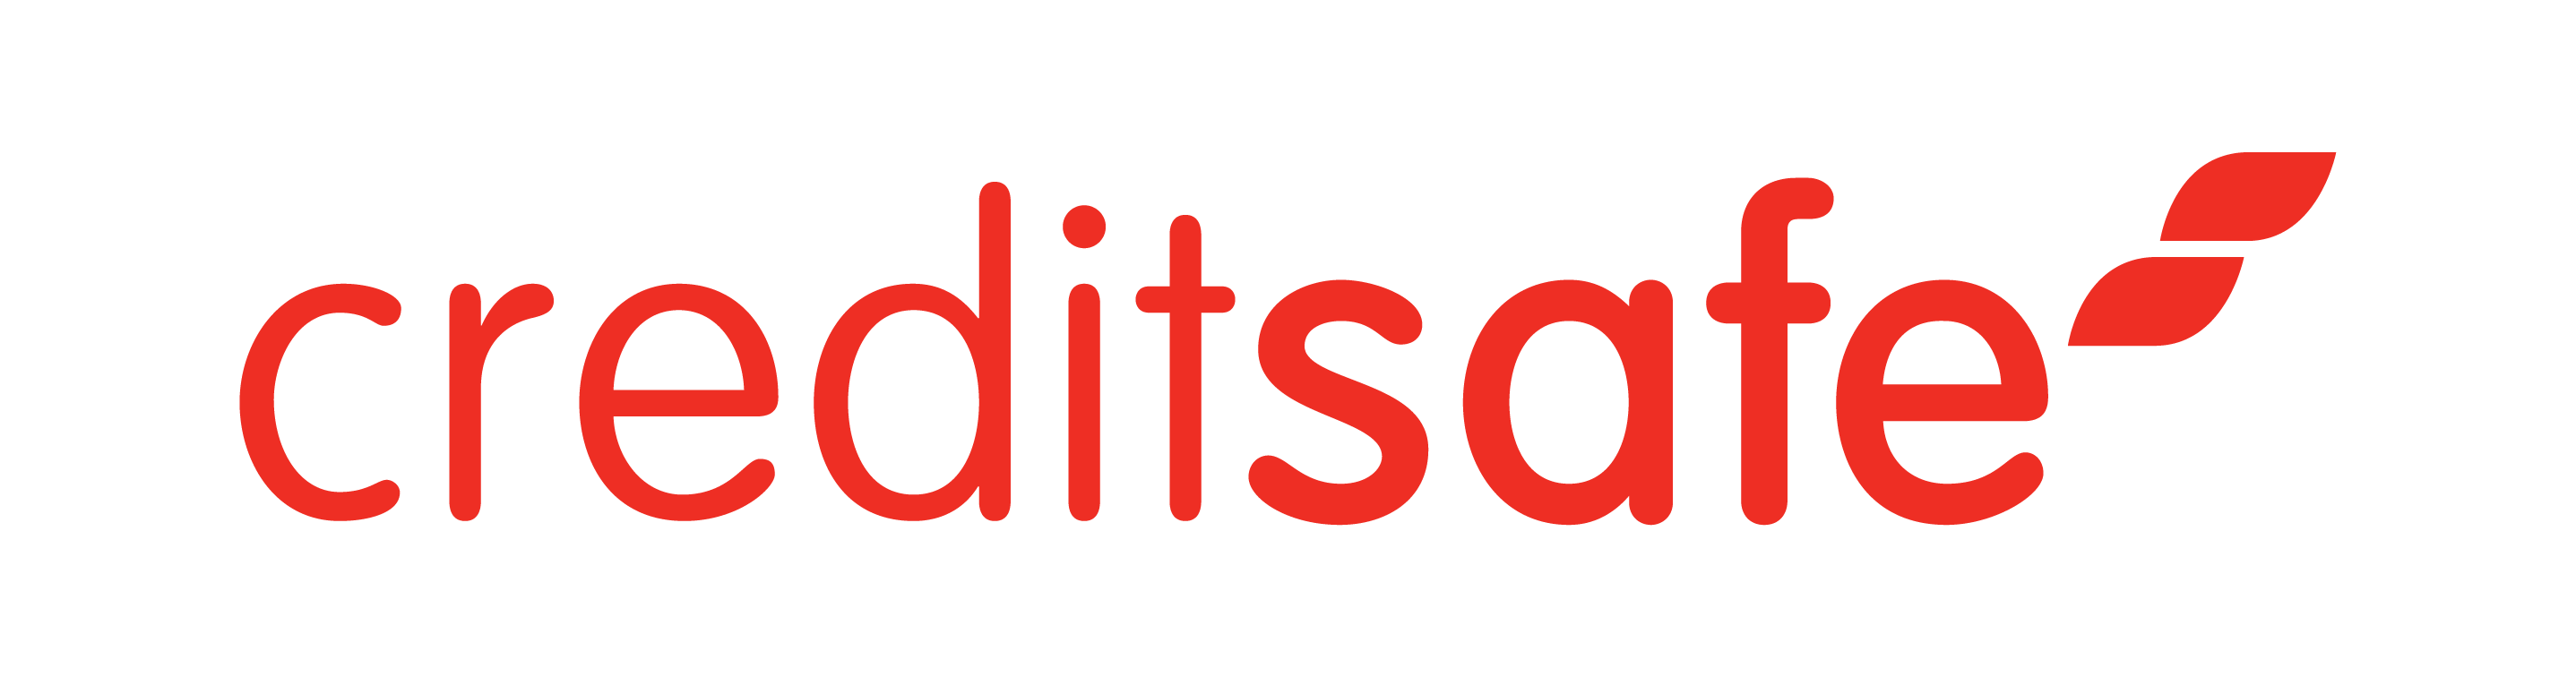 Creditsafe Logo Red